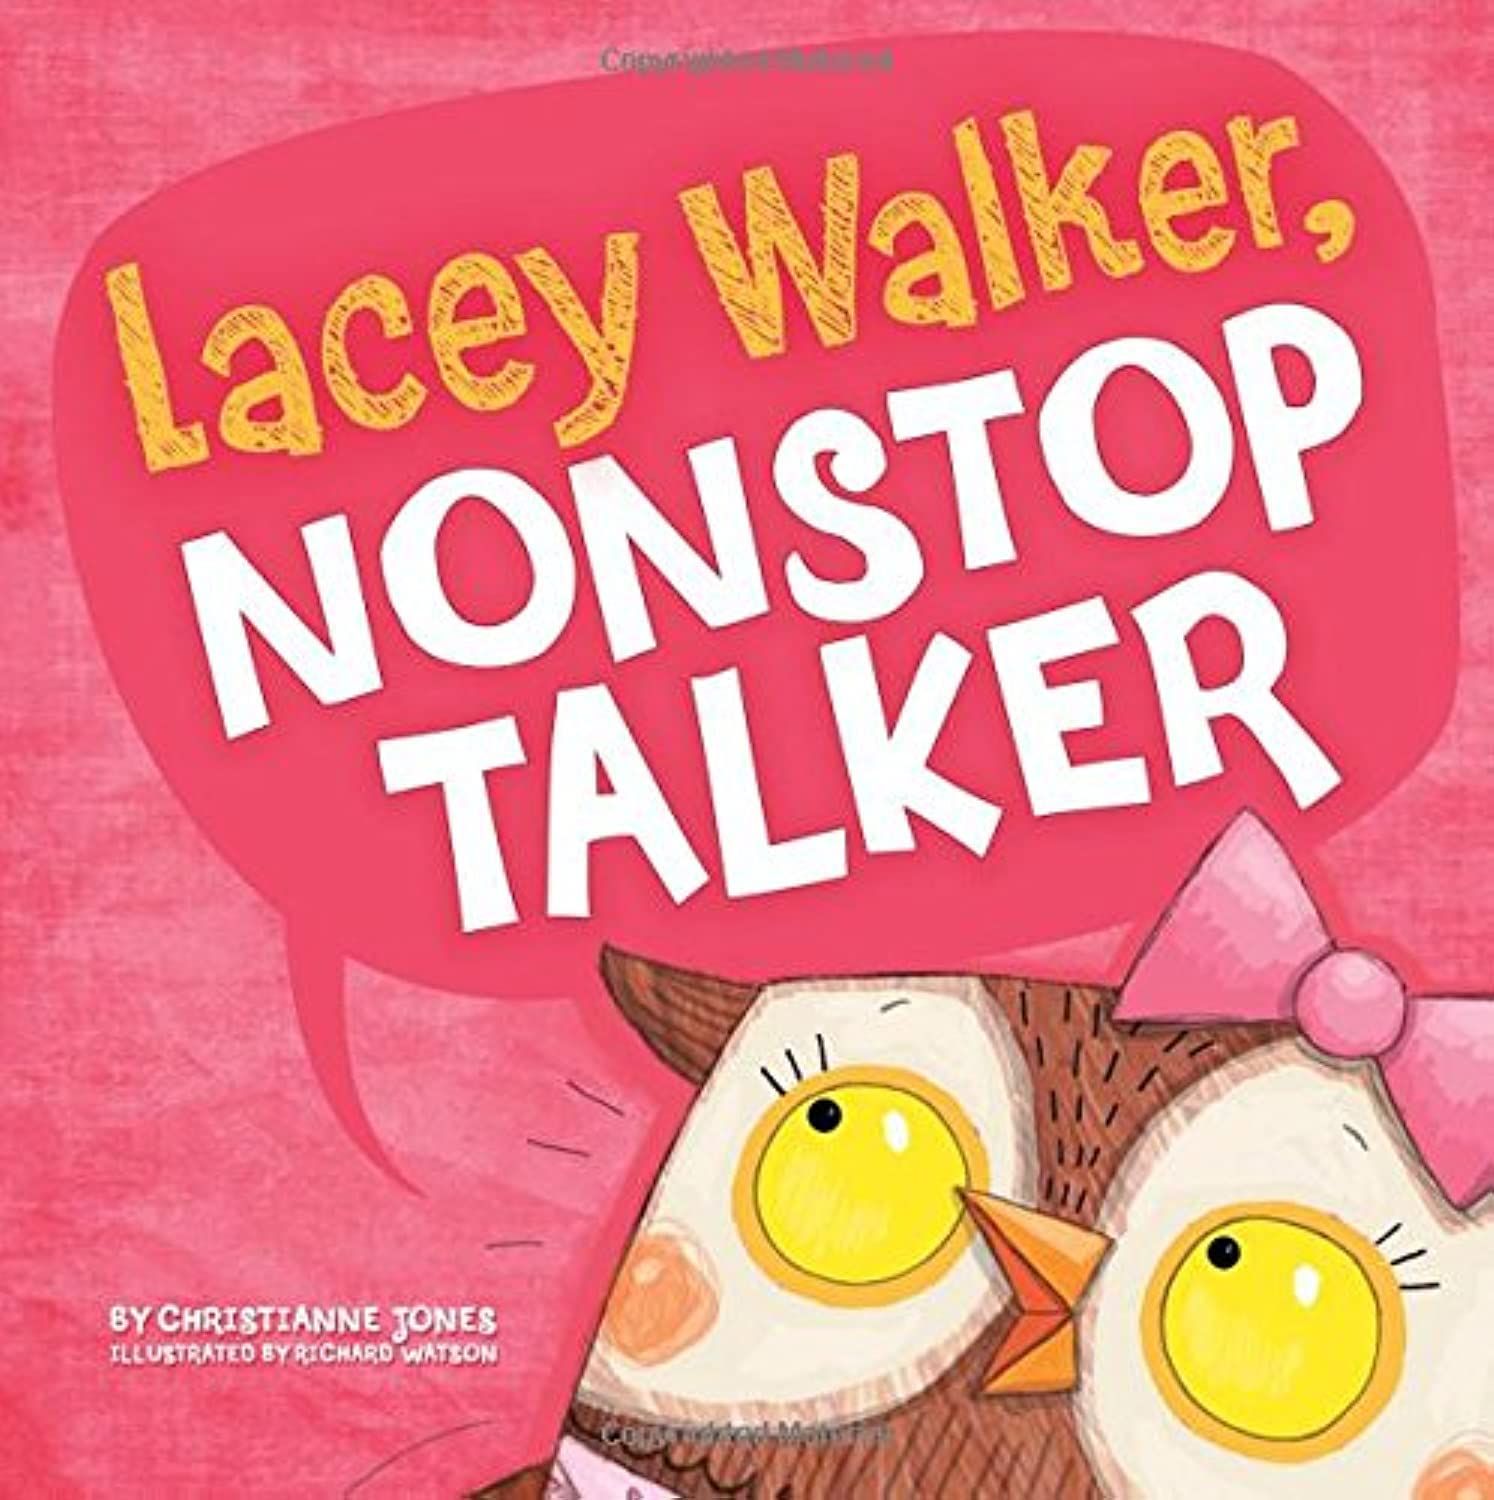 Lacey Walker, Nonstop Talker book cover